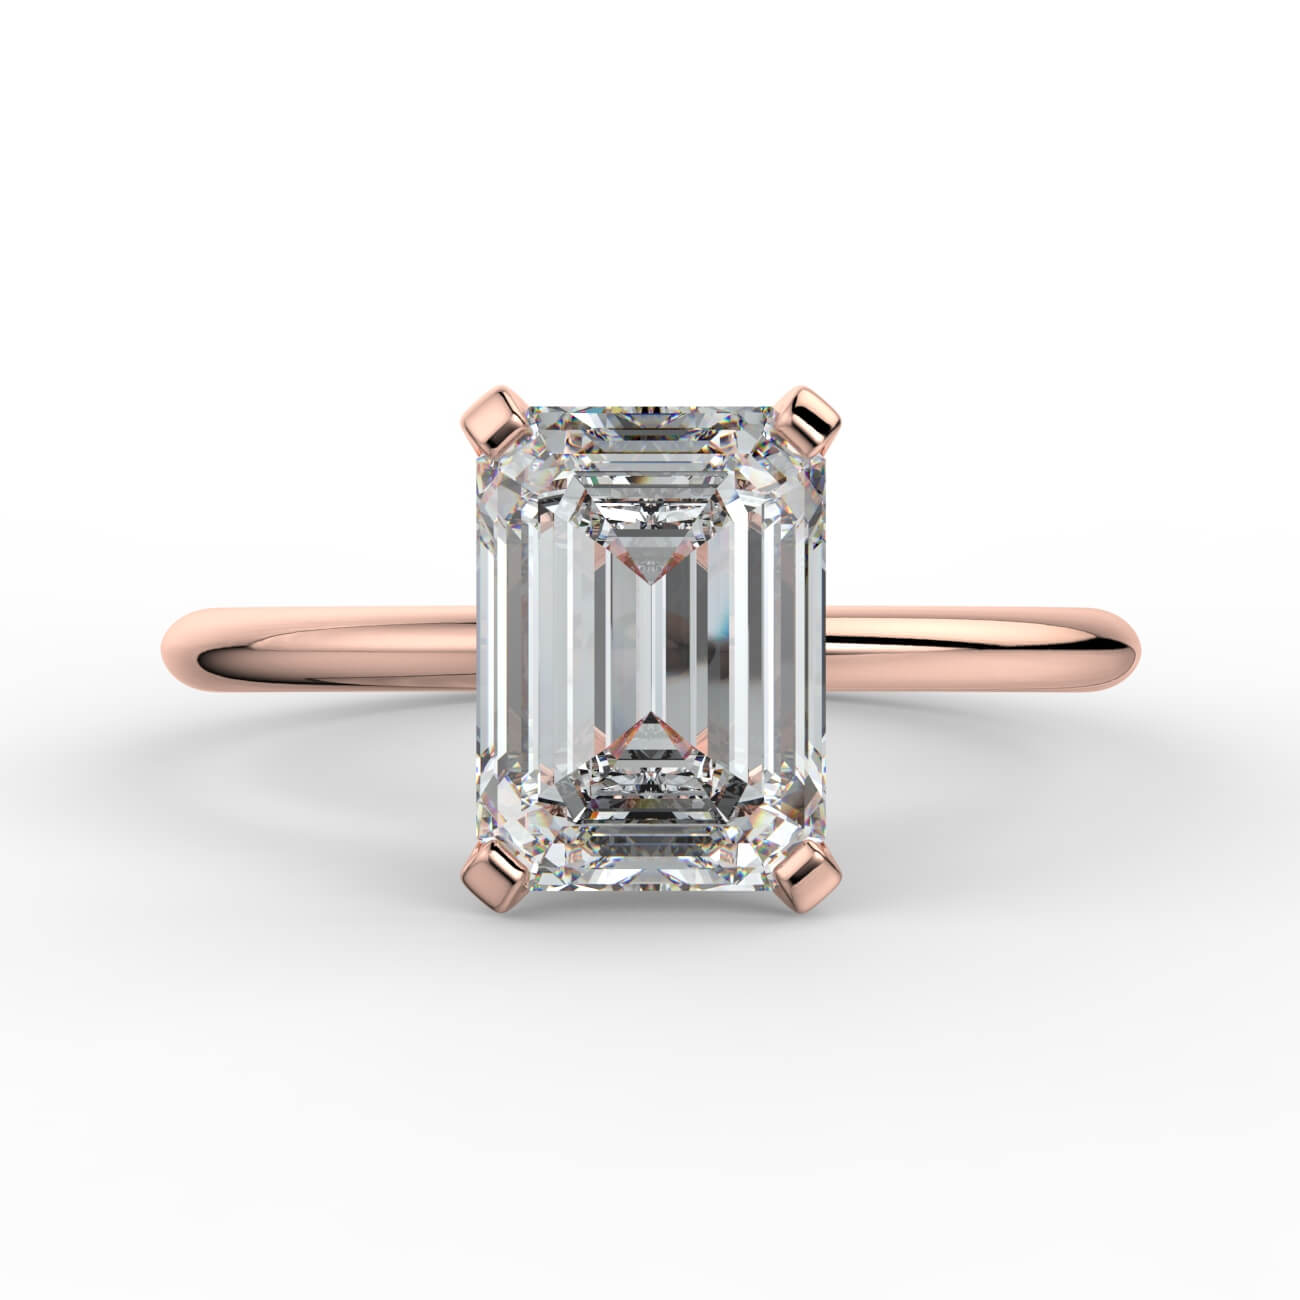 Knife-edge solitaire emerald cut diamond engagement ring in rose gold – Australian Diamond Network